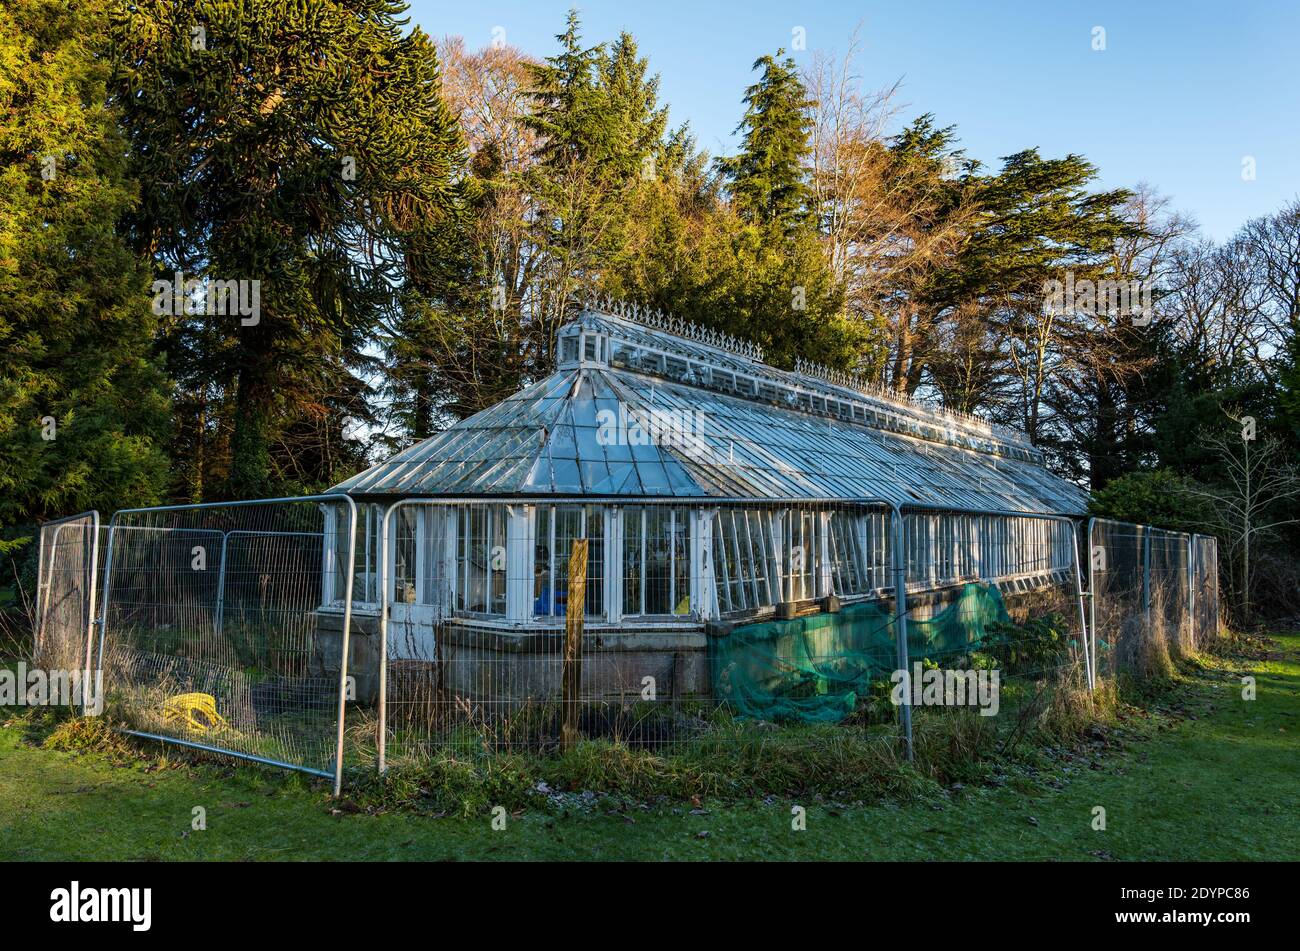 Derelict ornate Victorian conservatory, glasshouse or greenhouse, Lauriston Castle garden, Edinburgh, Scotland, UK Stock Photo